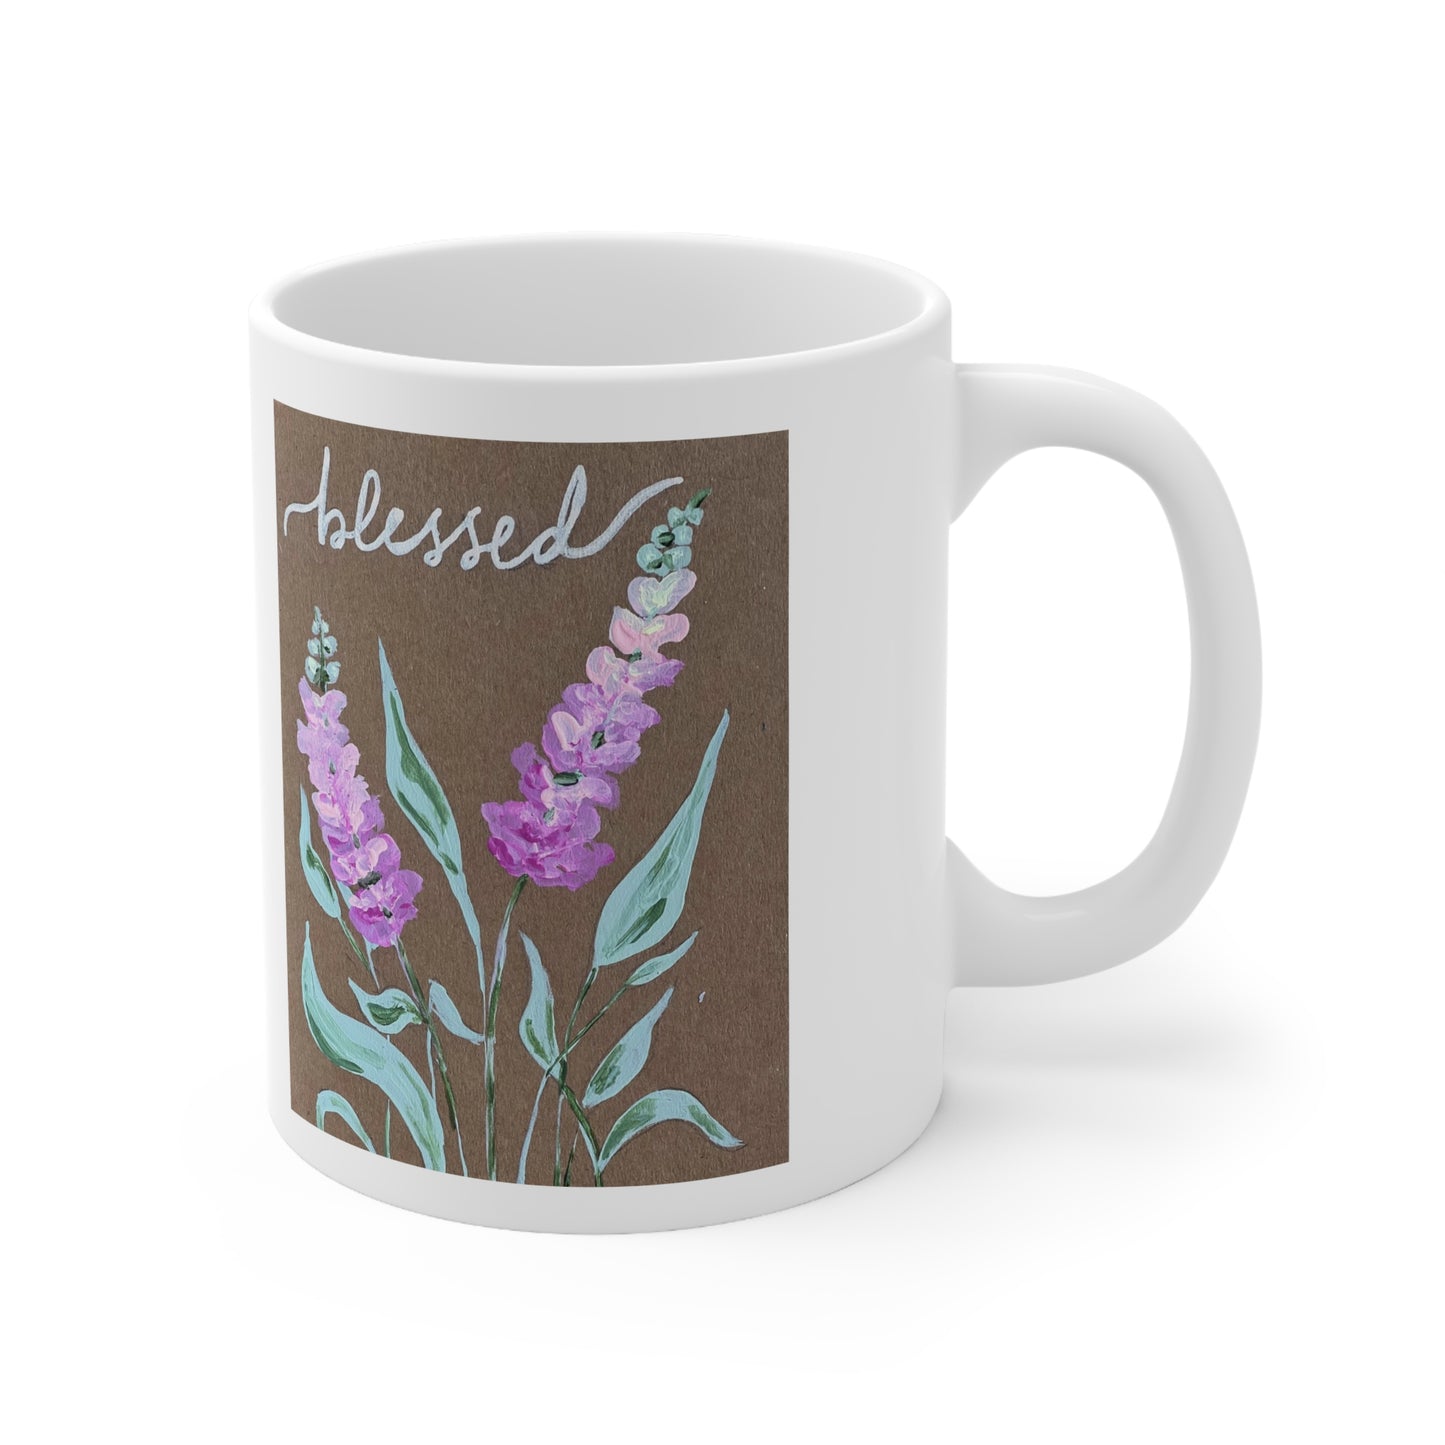 Blessed - Ceramic Mug 11oz